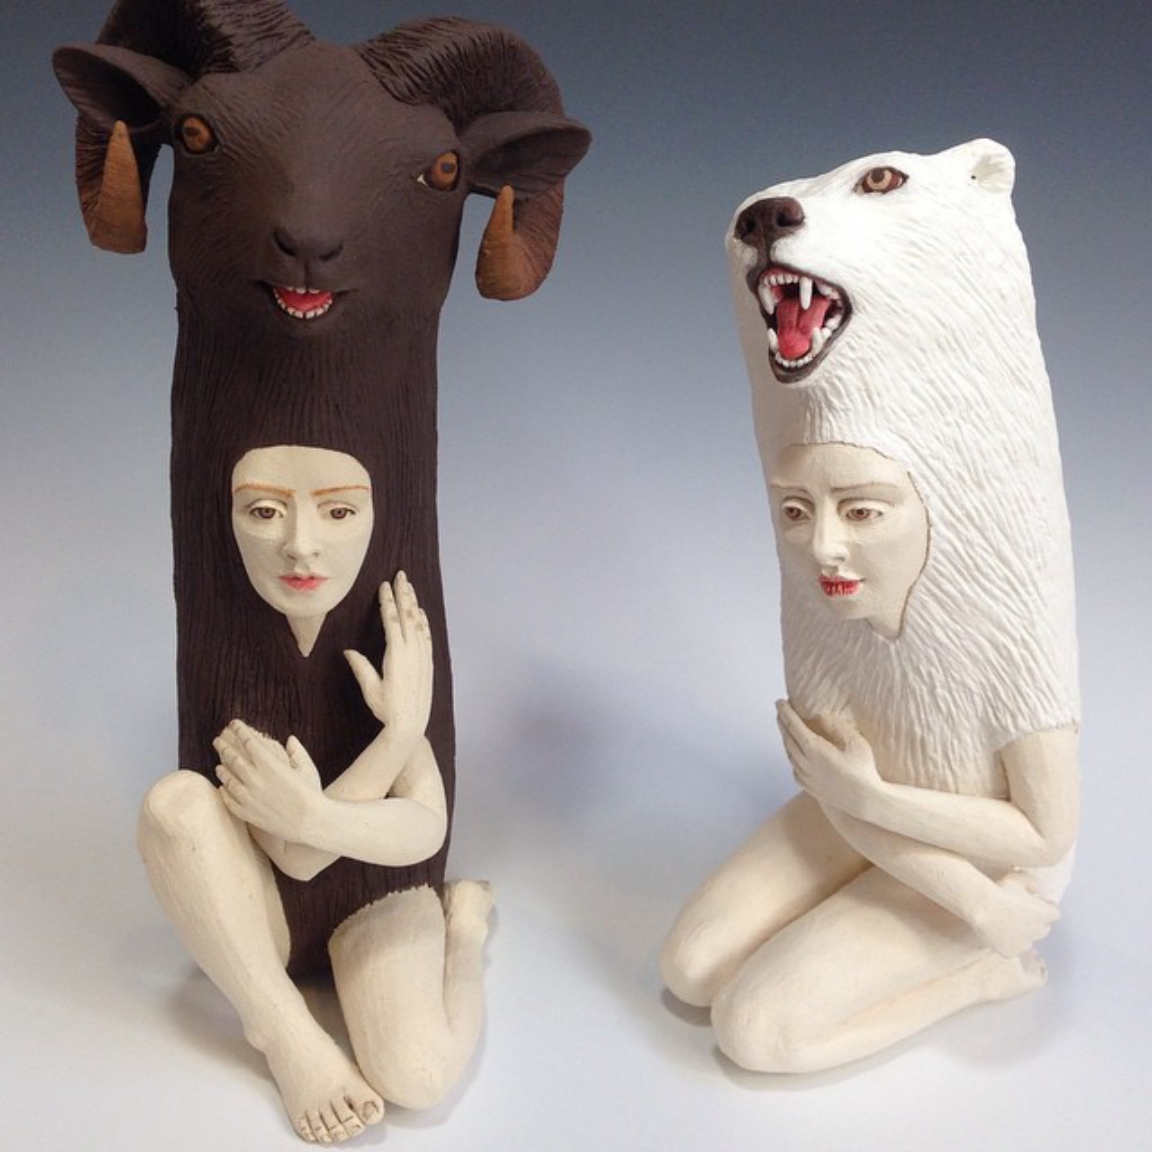 Crystal Morey's Striking Ceramic Sculptures Of Human Animal Hybrids (5)